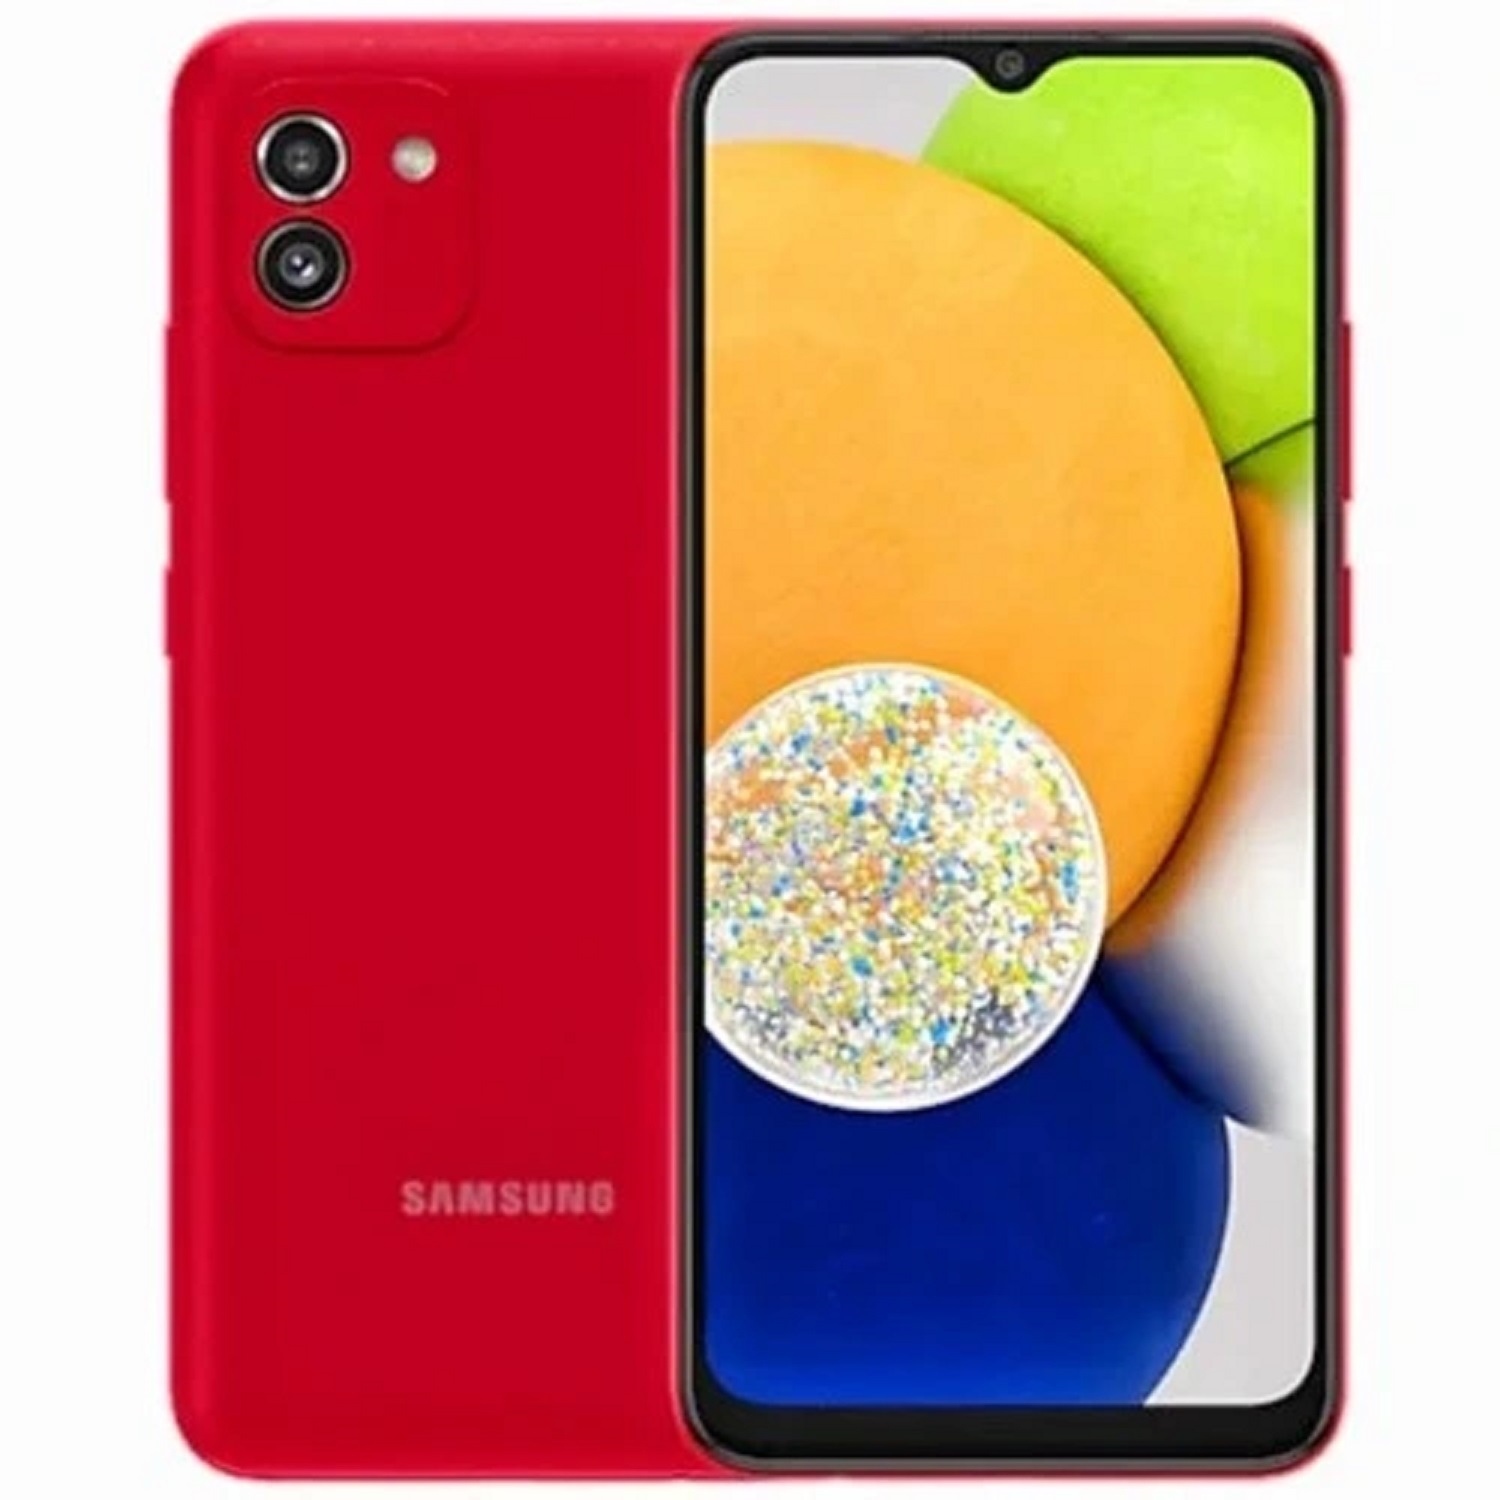 Samsung Galaxy A03 64GB (SM-A035M/DS) GSM Unlocked Smartphone - International Model - Red - Brand New